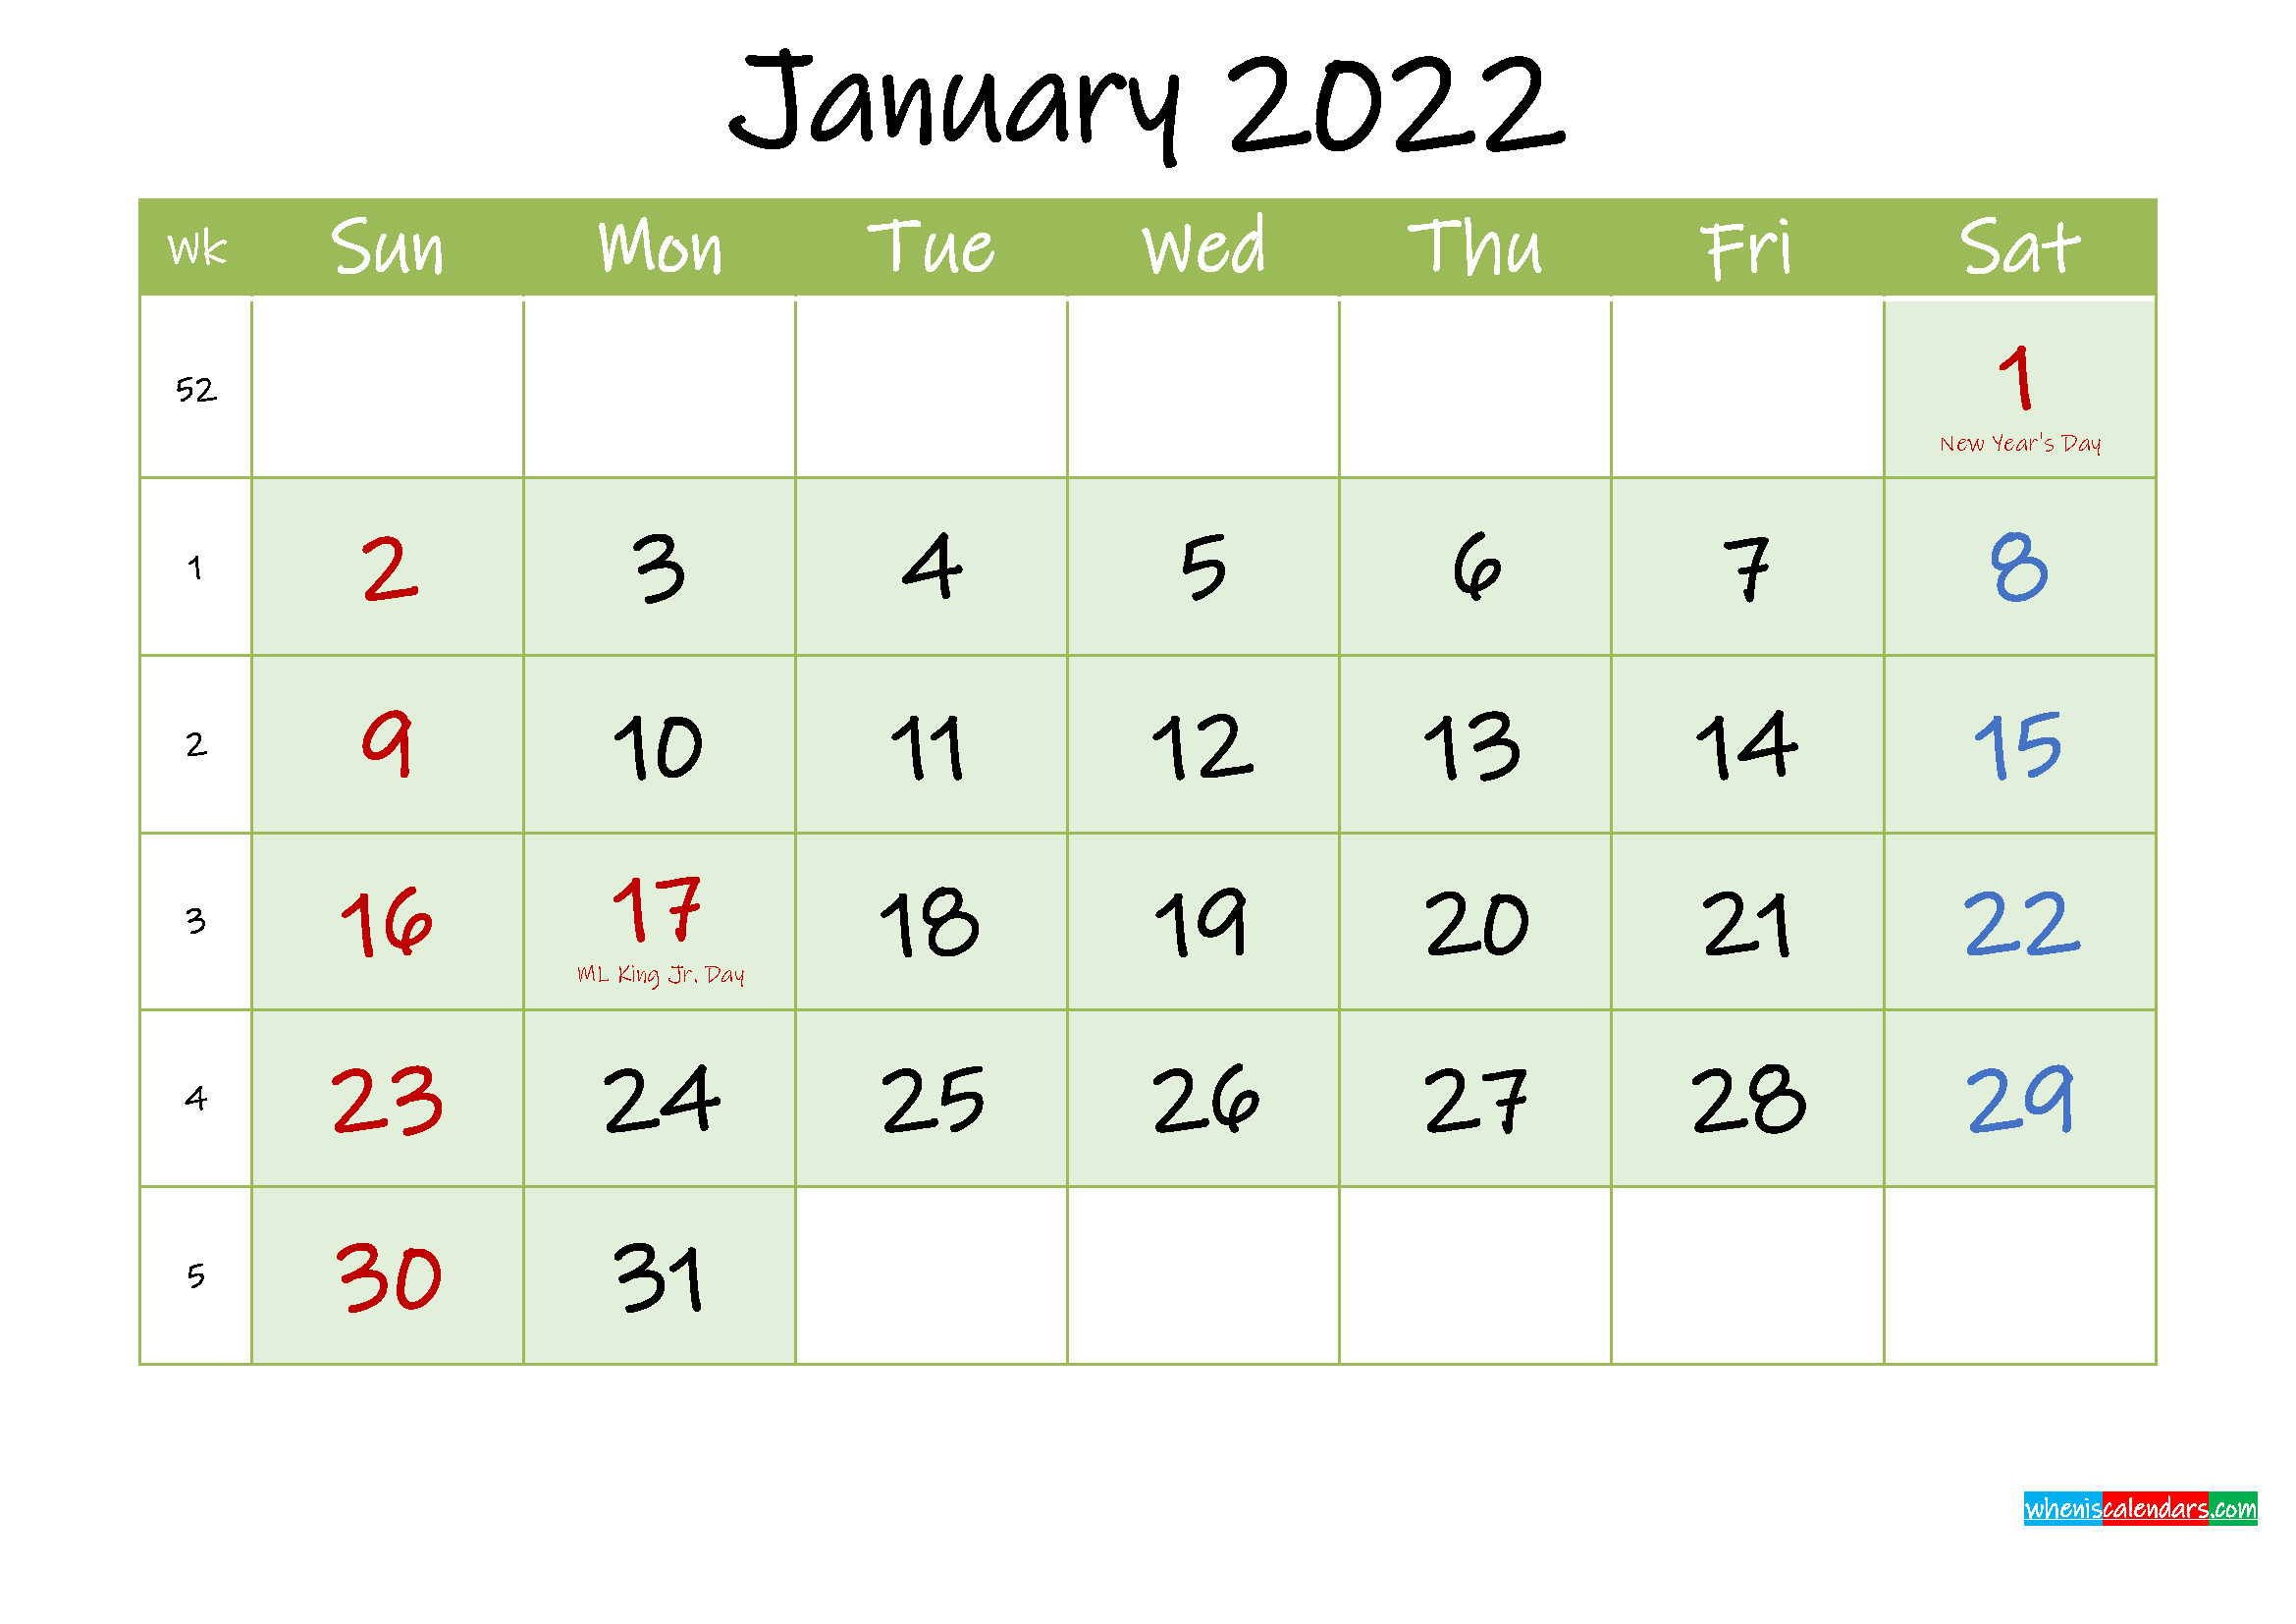 January 2022 Free Printable Calendar - Template ink22m121 ...